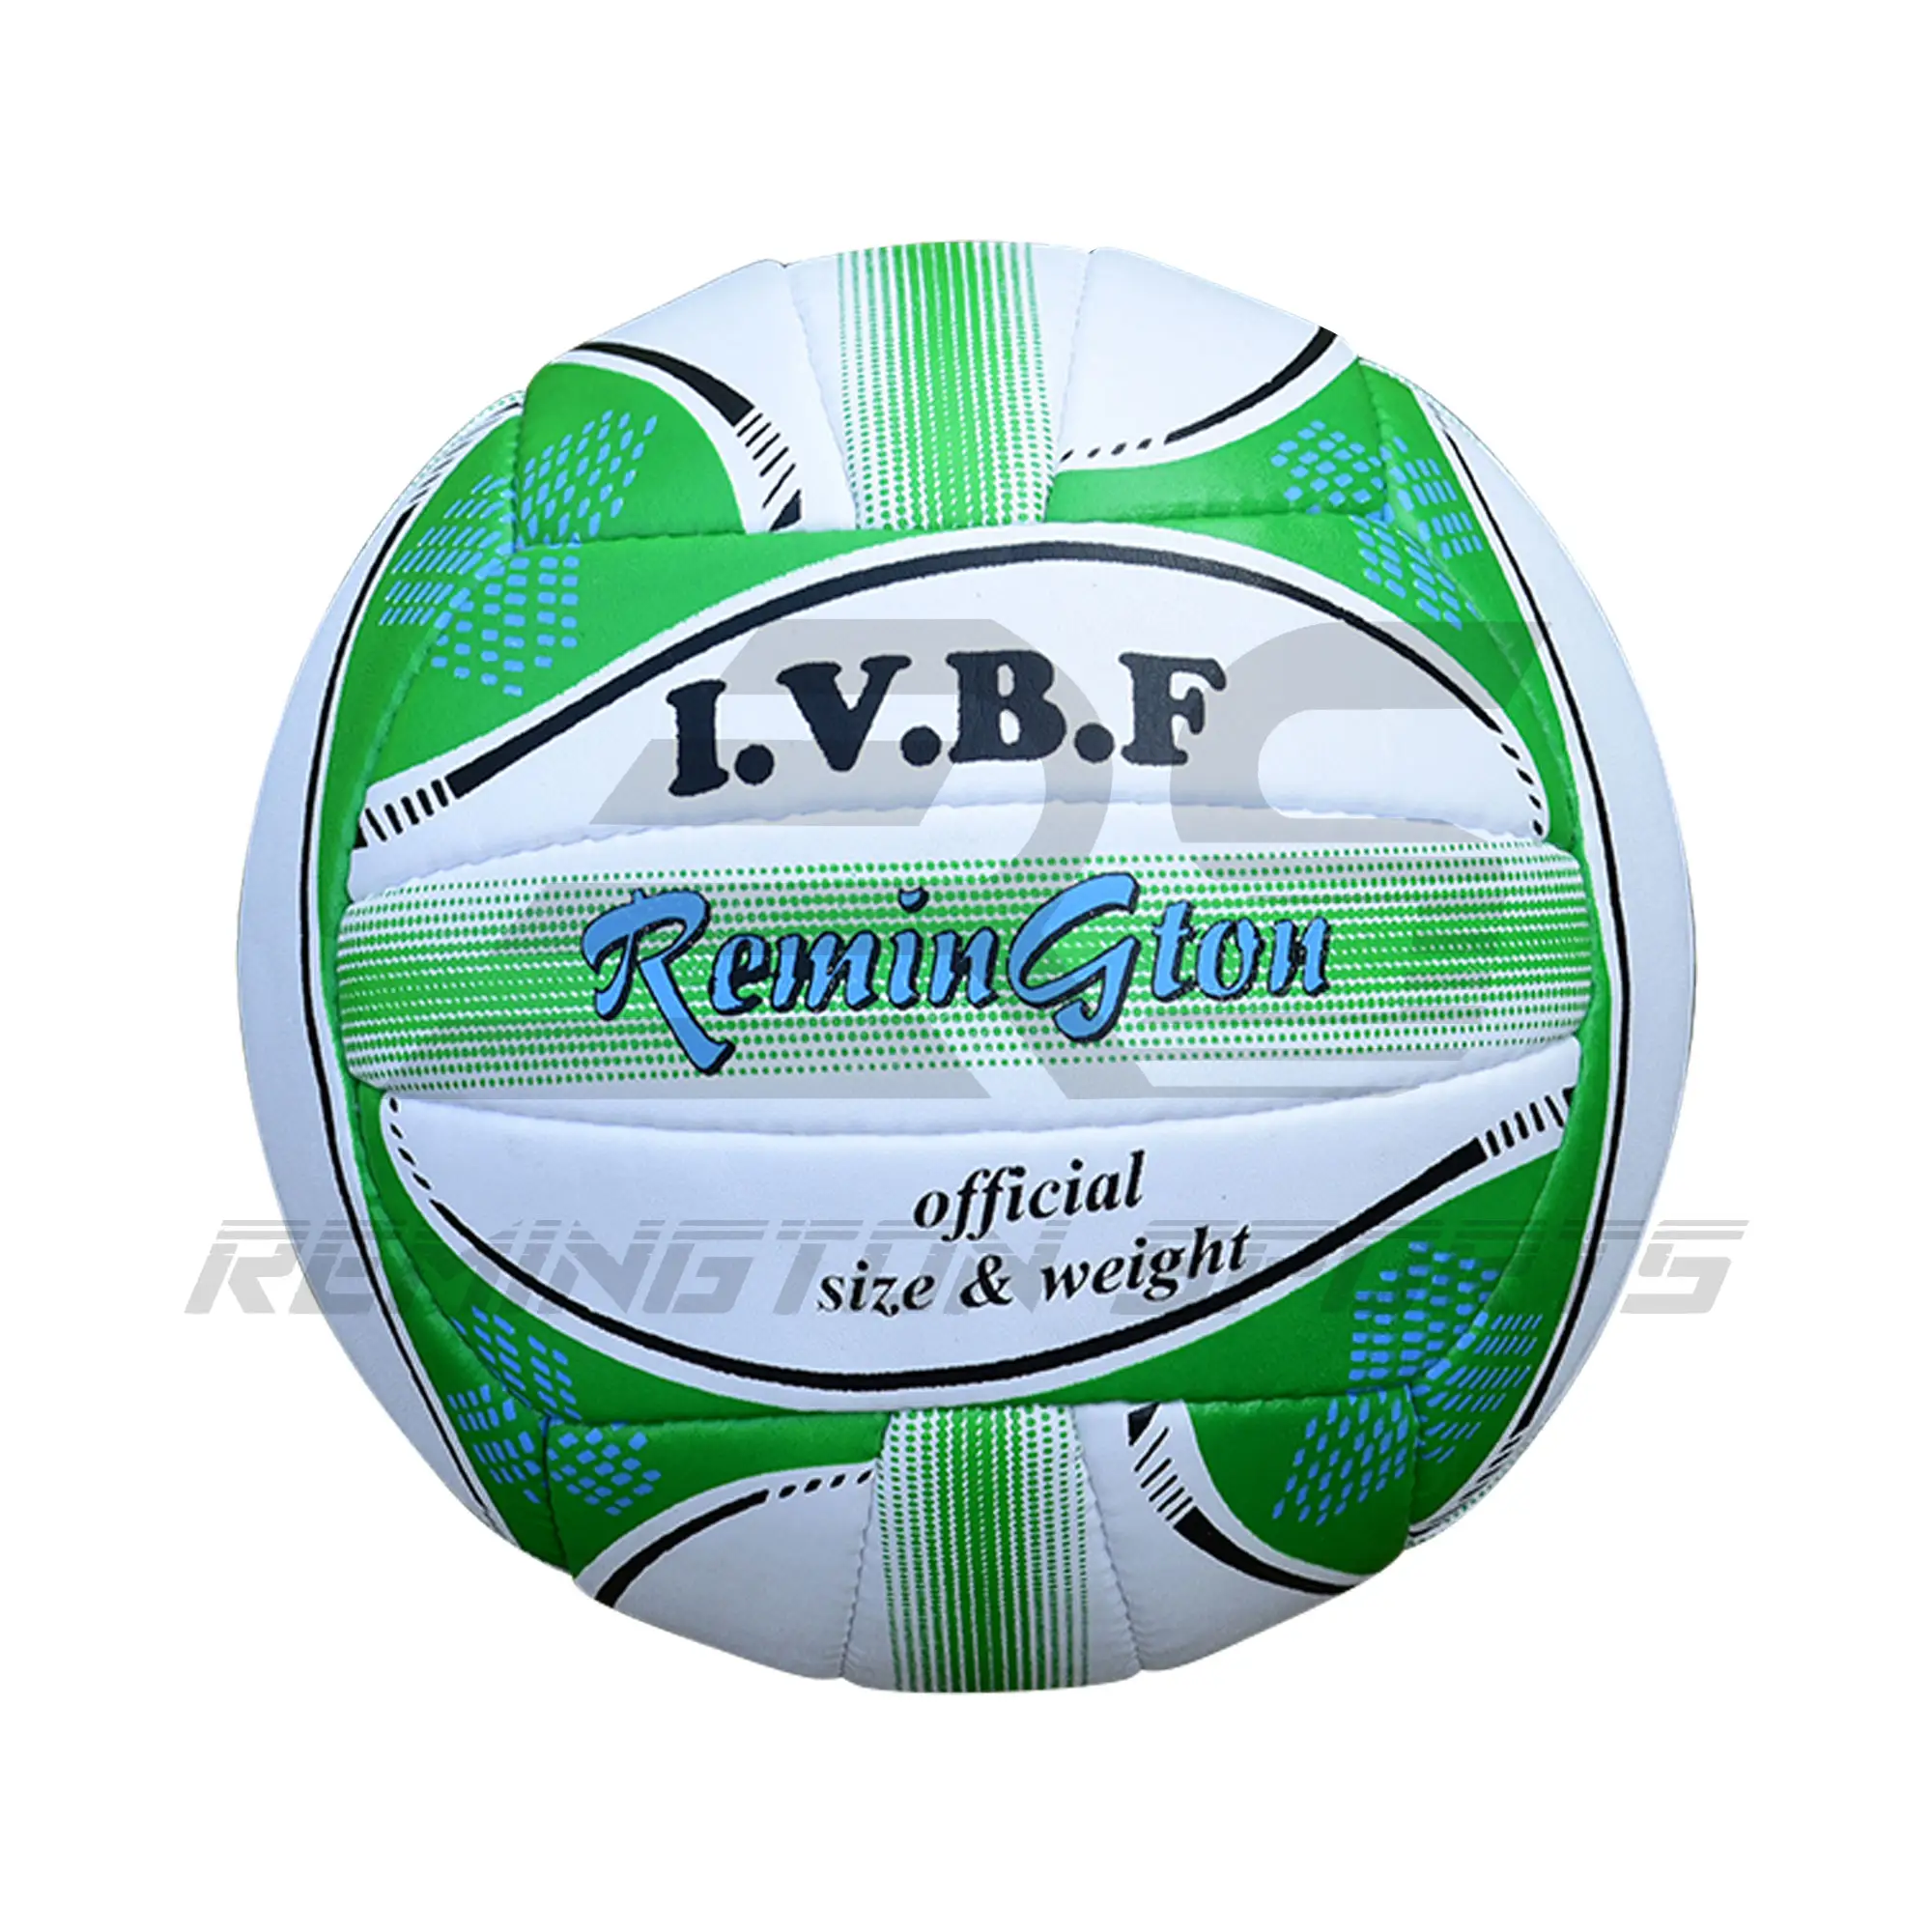 Balles de Volley-ball avec les derniers modèles 2022, en cuir PU, balles de Volley-ball dures, rebond élevé, prix de gros, balle de Volley-ball en pk